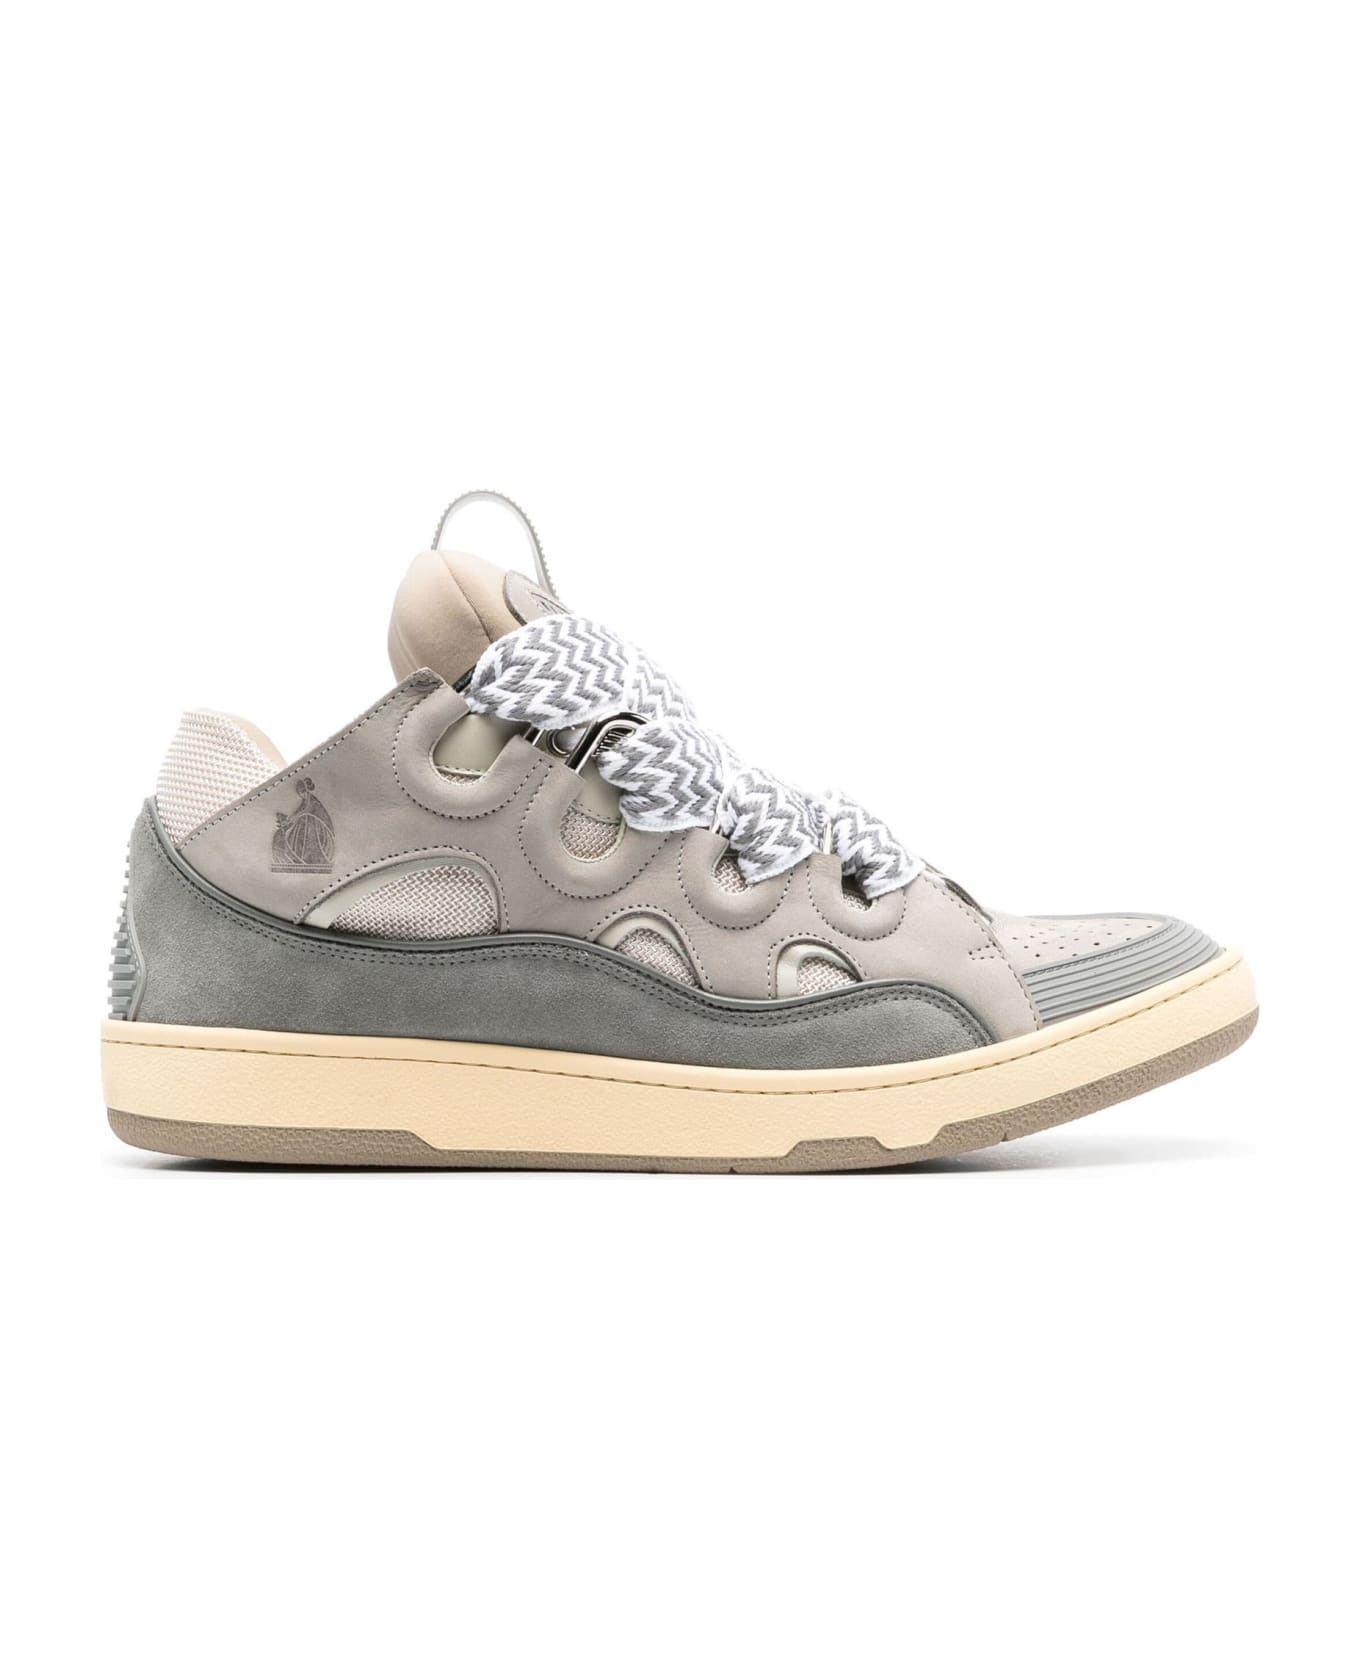 Lanvin Sneakers Grey - Grey